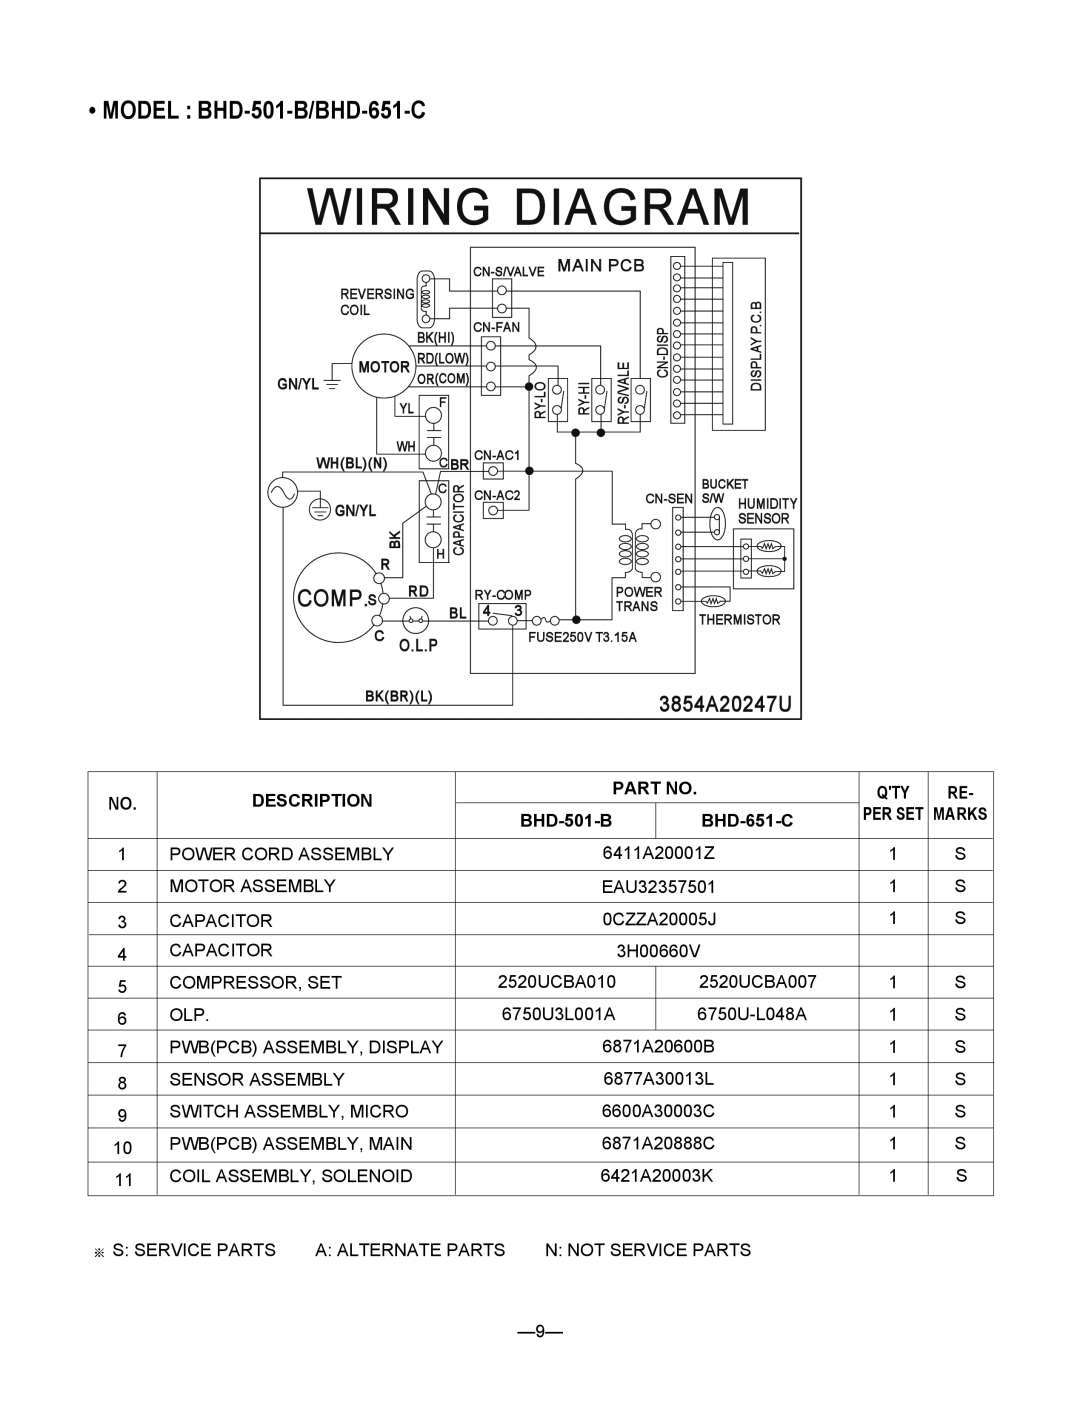 Heat Controller BHD-301-C service manual MODEL BHD-501-B/BHD-651-C, Wiring Diagram, Comp, 3854A20247U, Description 